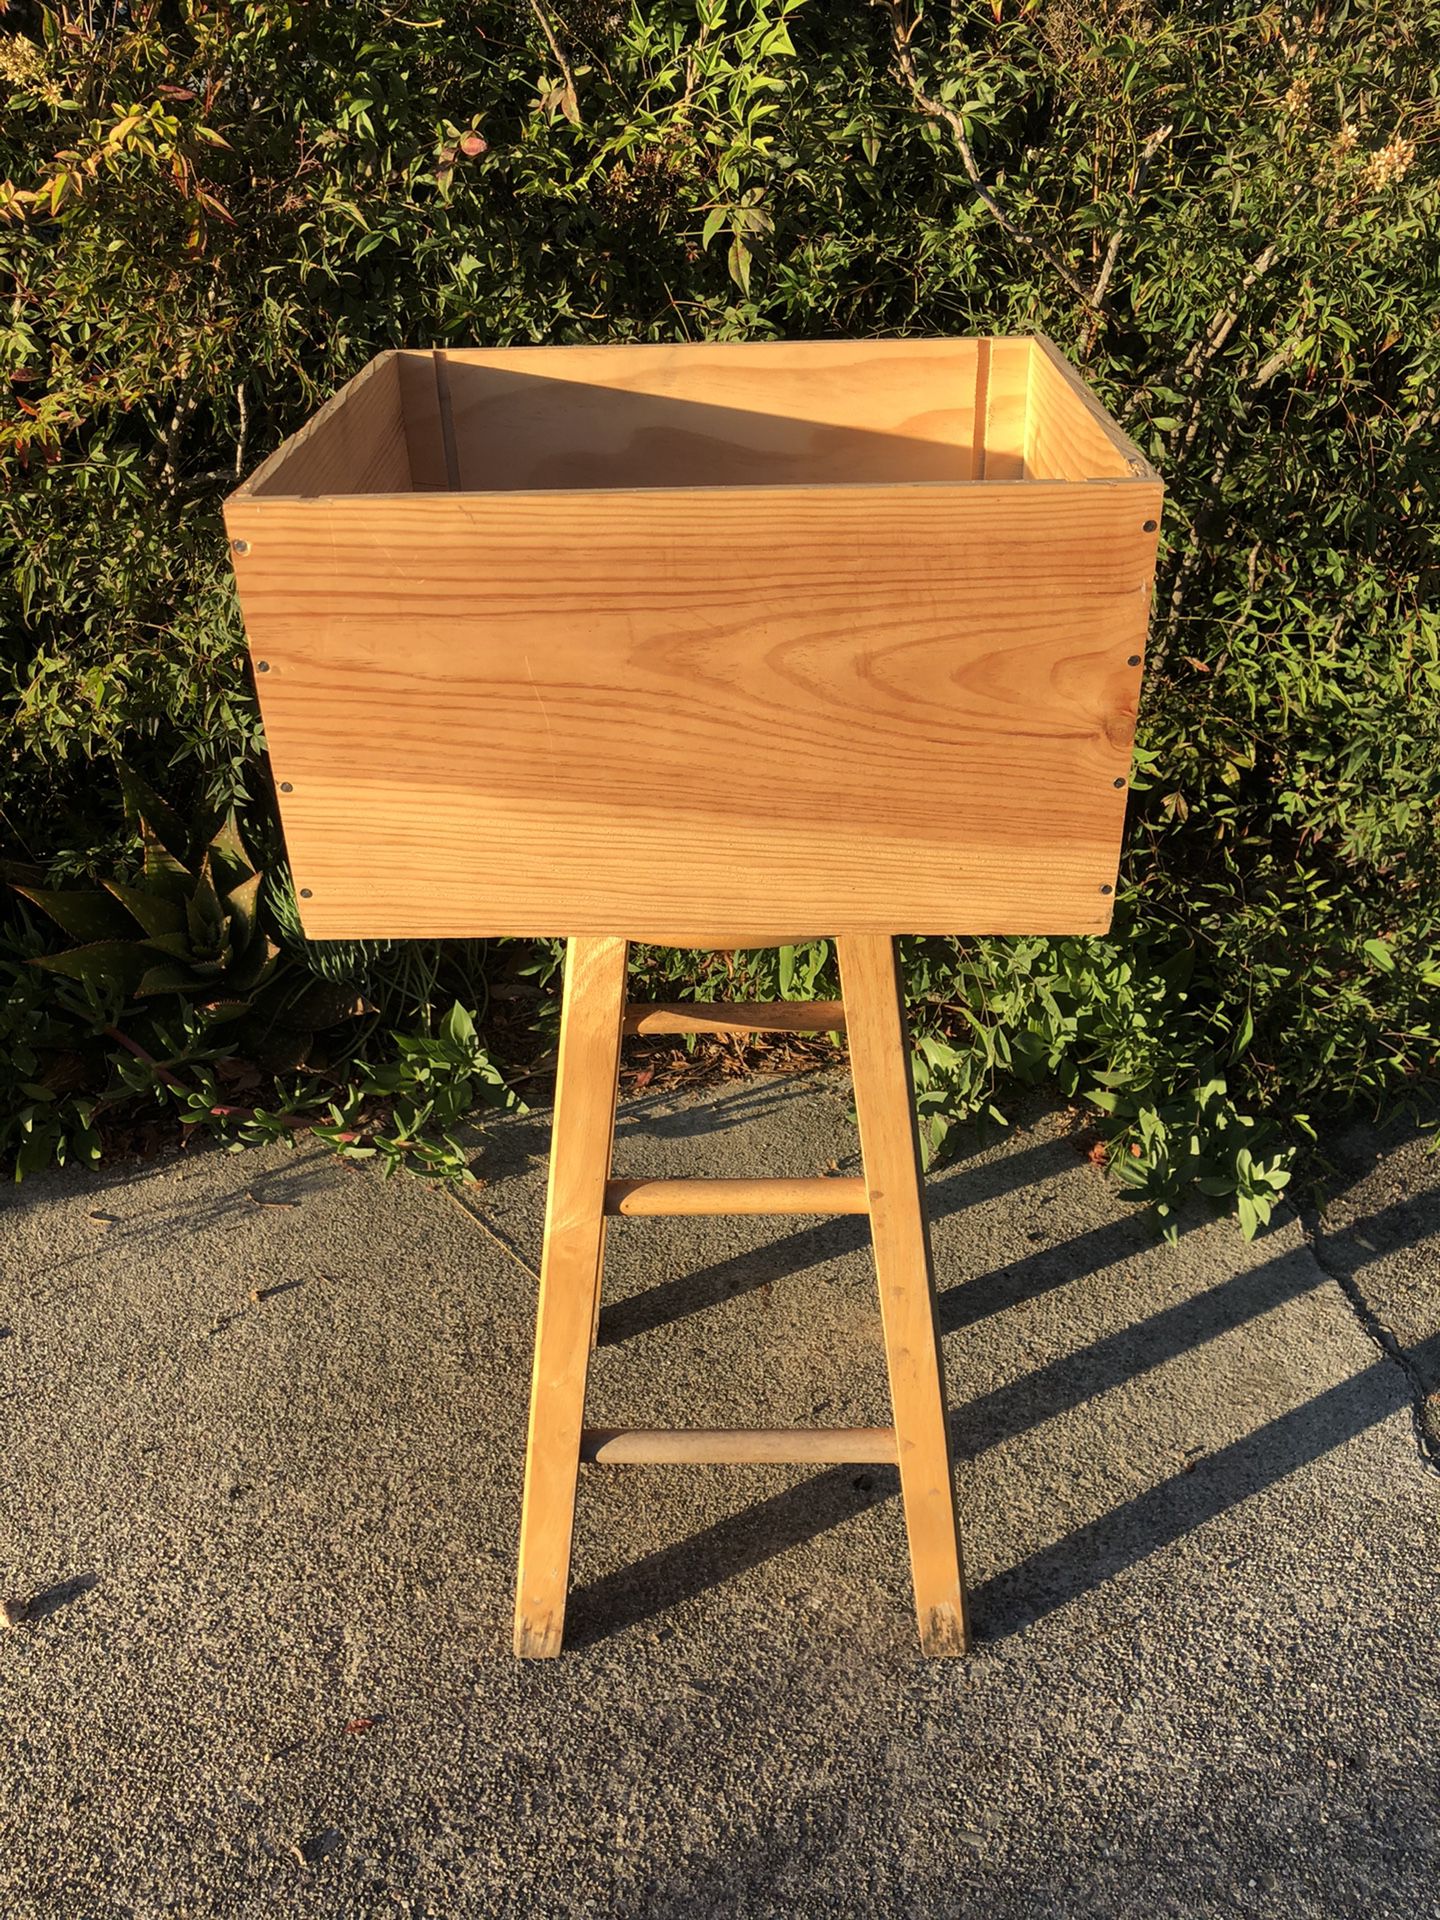 Wine box stool